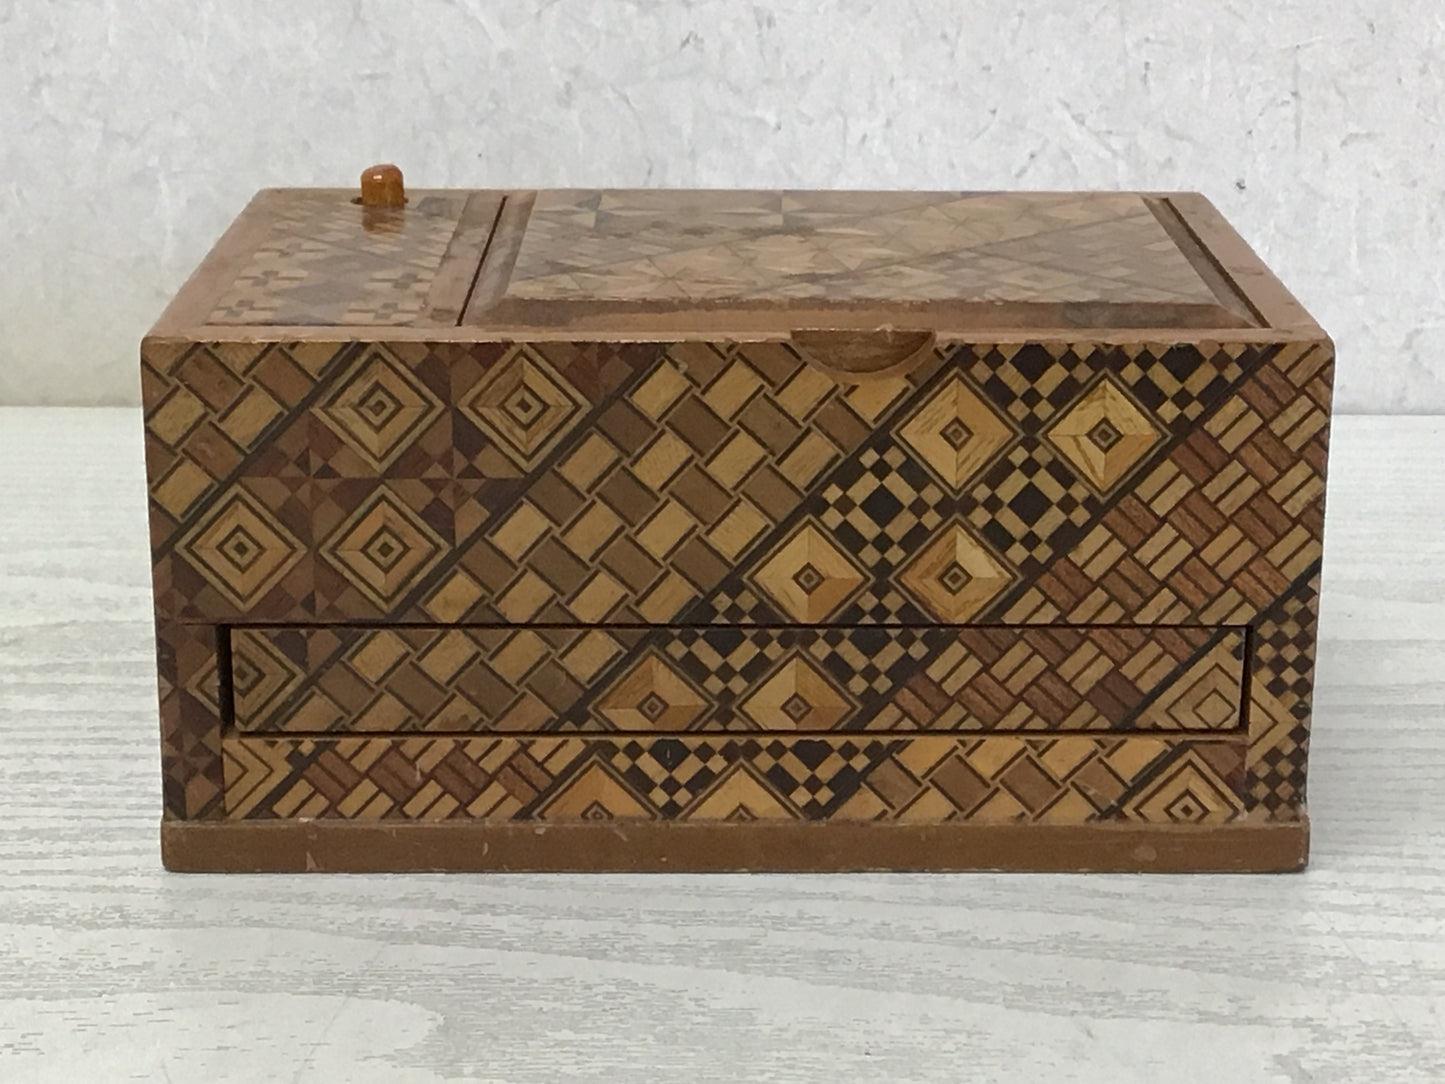 Y2335 BOX Hakone woodwork tobacco case storage interior Japan antique vintage